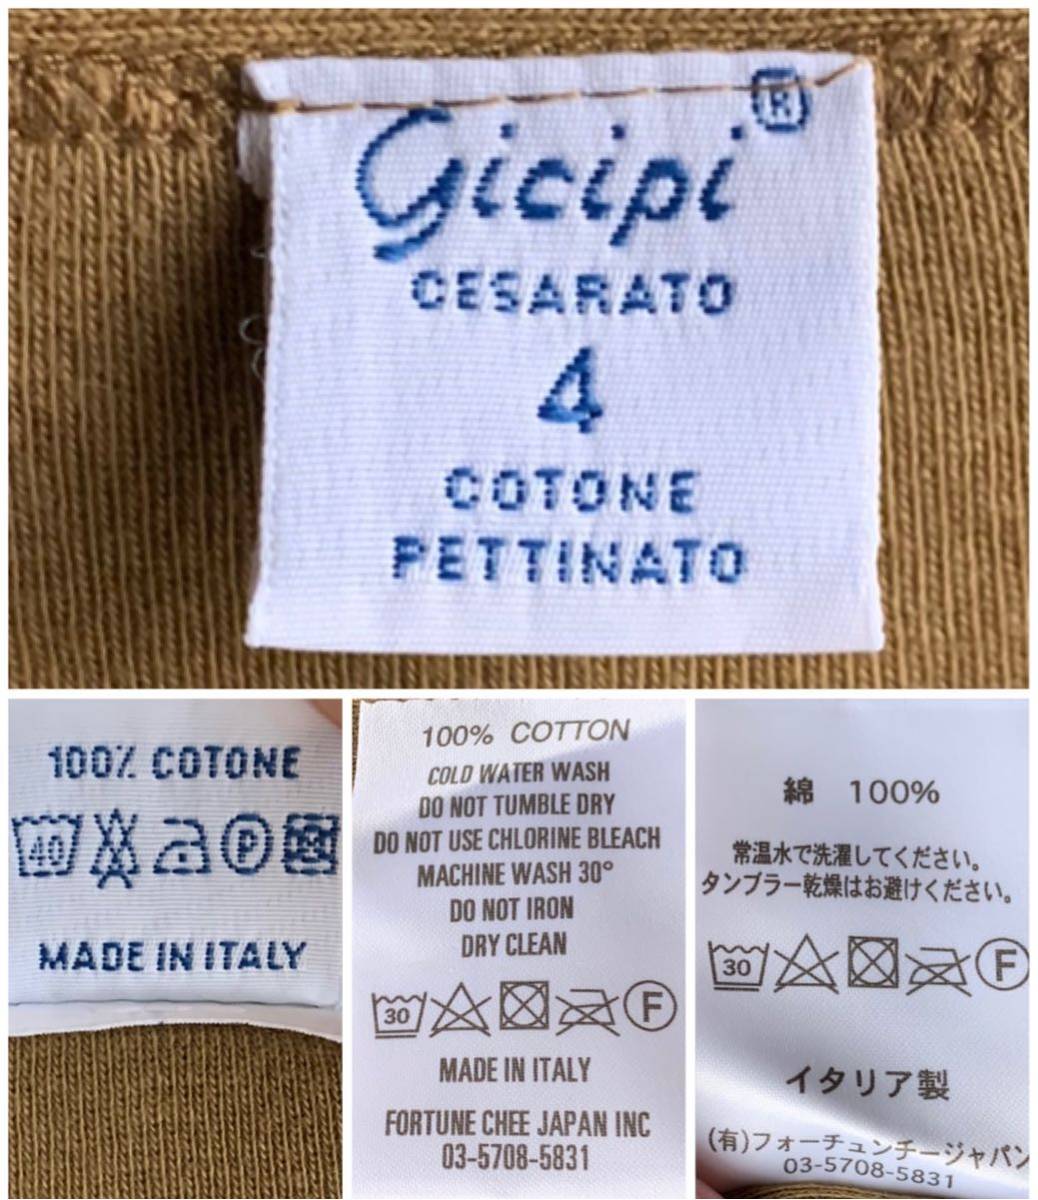 [ beautiful goods ]gicipi cardigan men's size 4 Camel button attaching Italy made cotton 100%jisipi